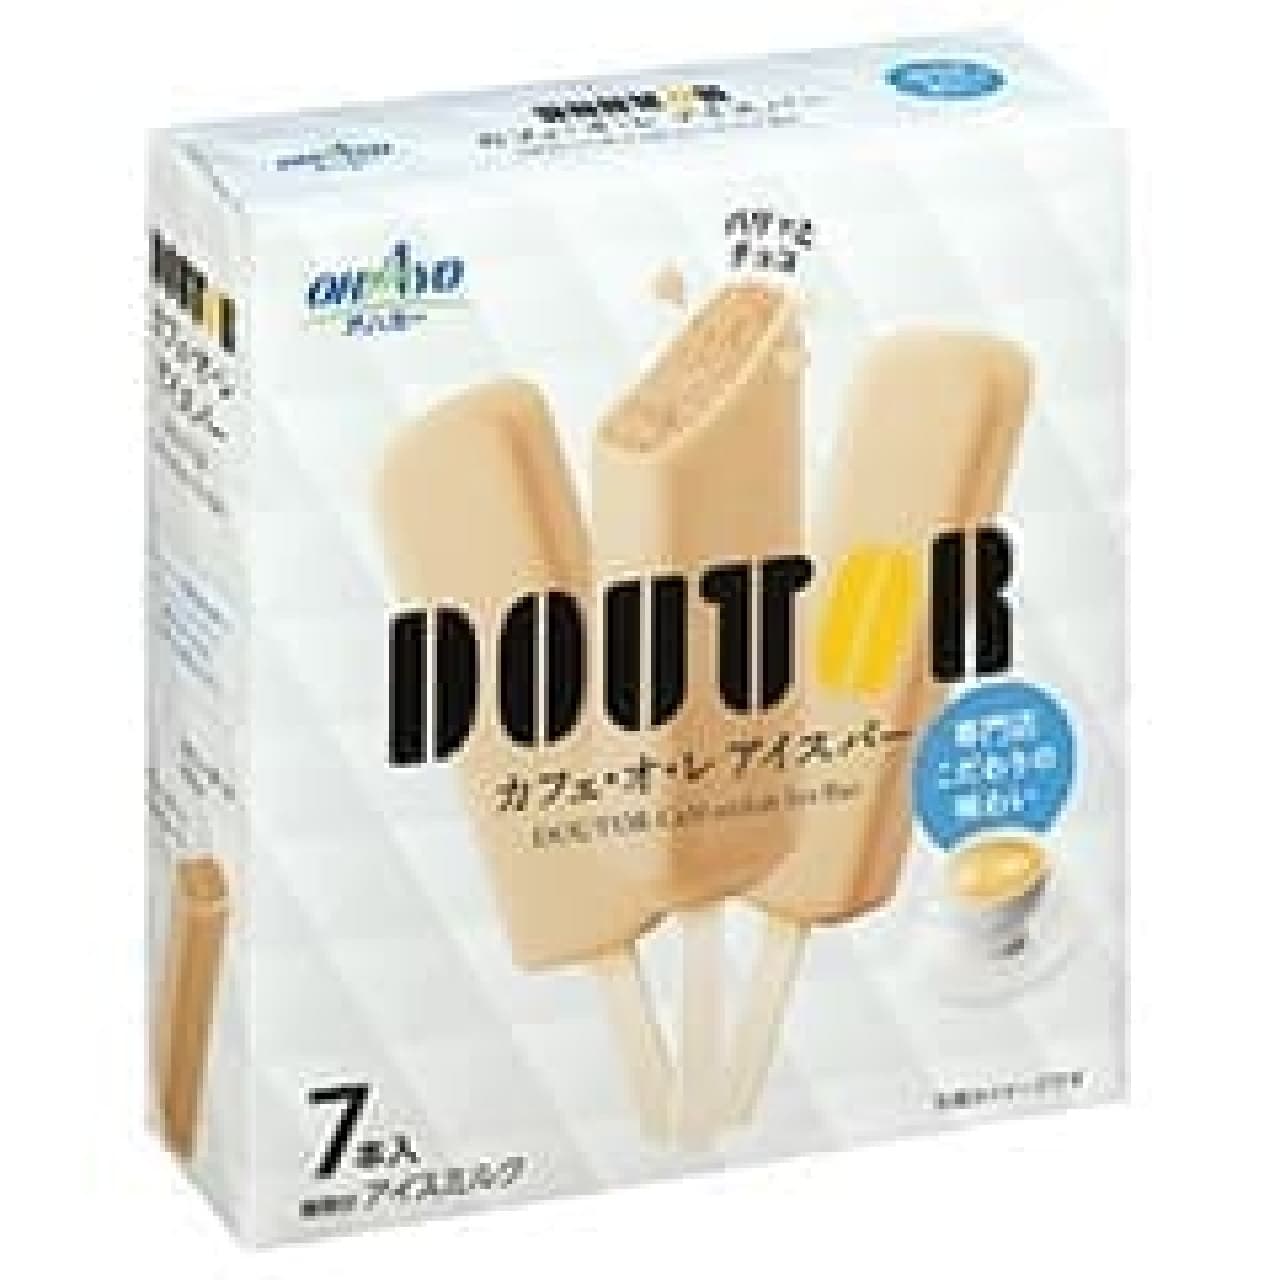 Ohayo Dairy Products "Doutor Cafe au lait Ice Bar"